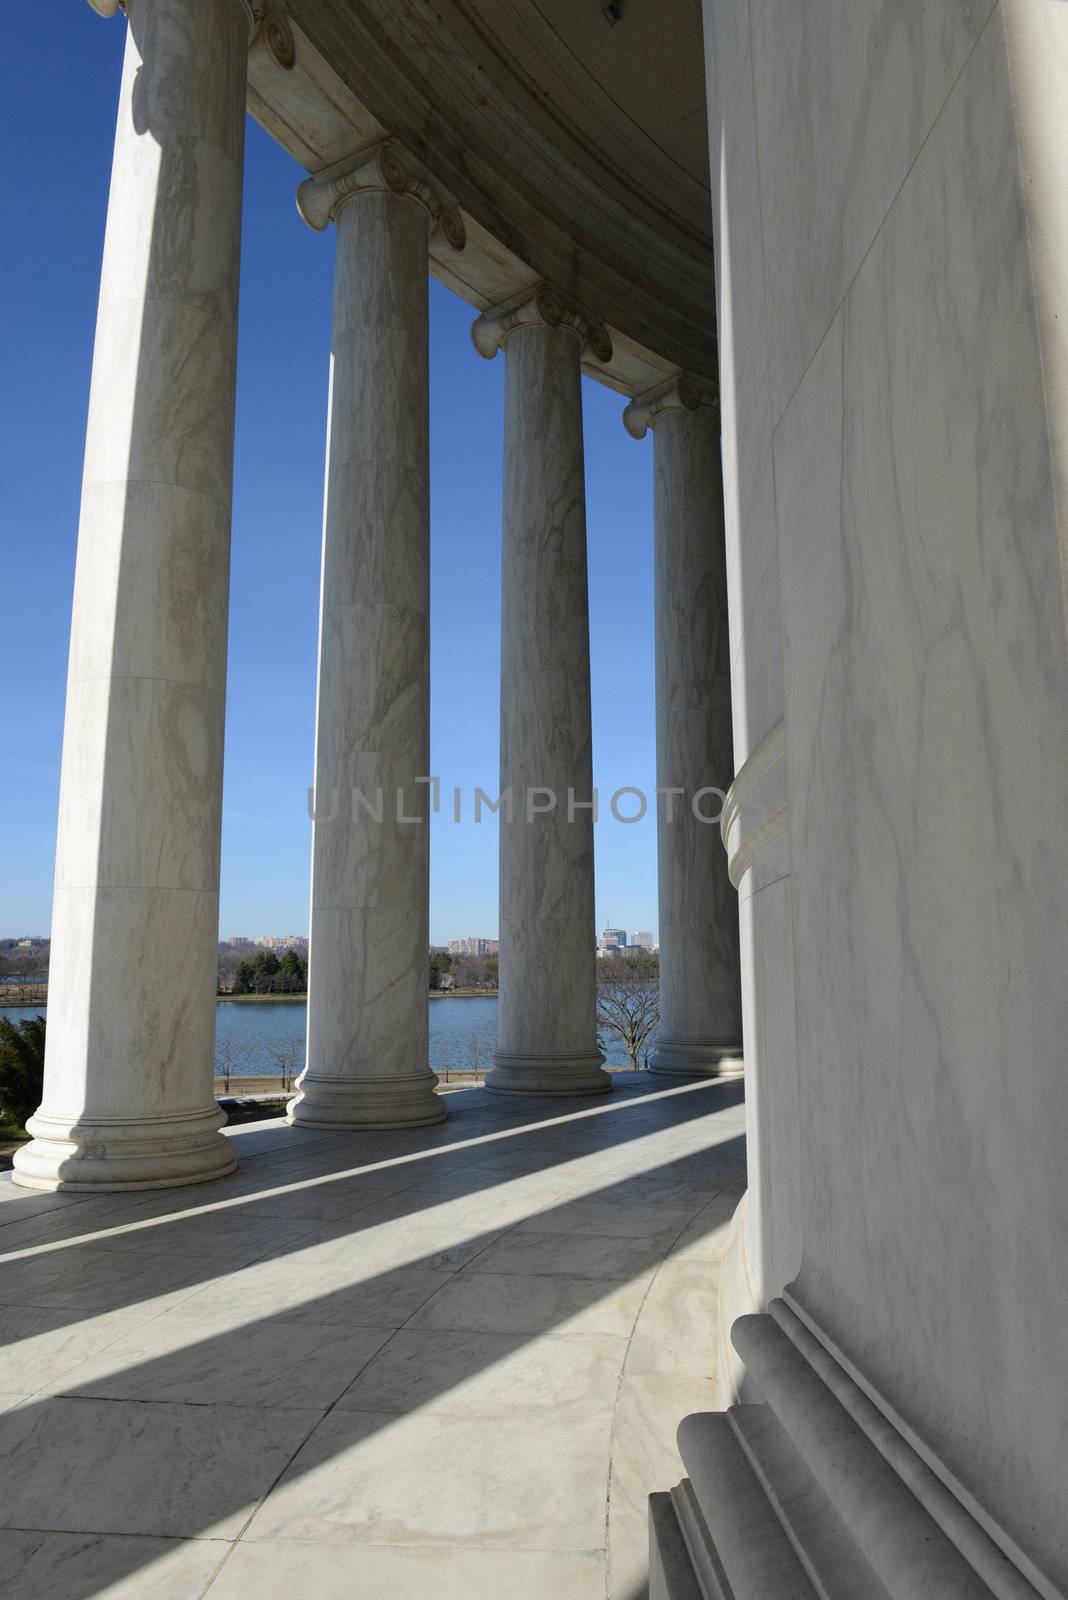 Jefferson Memorial in Washington DC by bbourdages